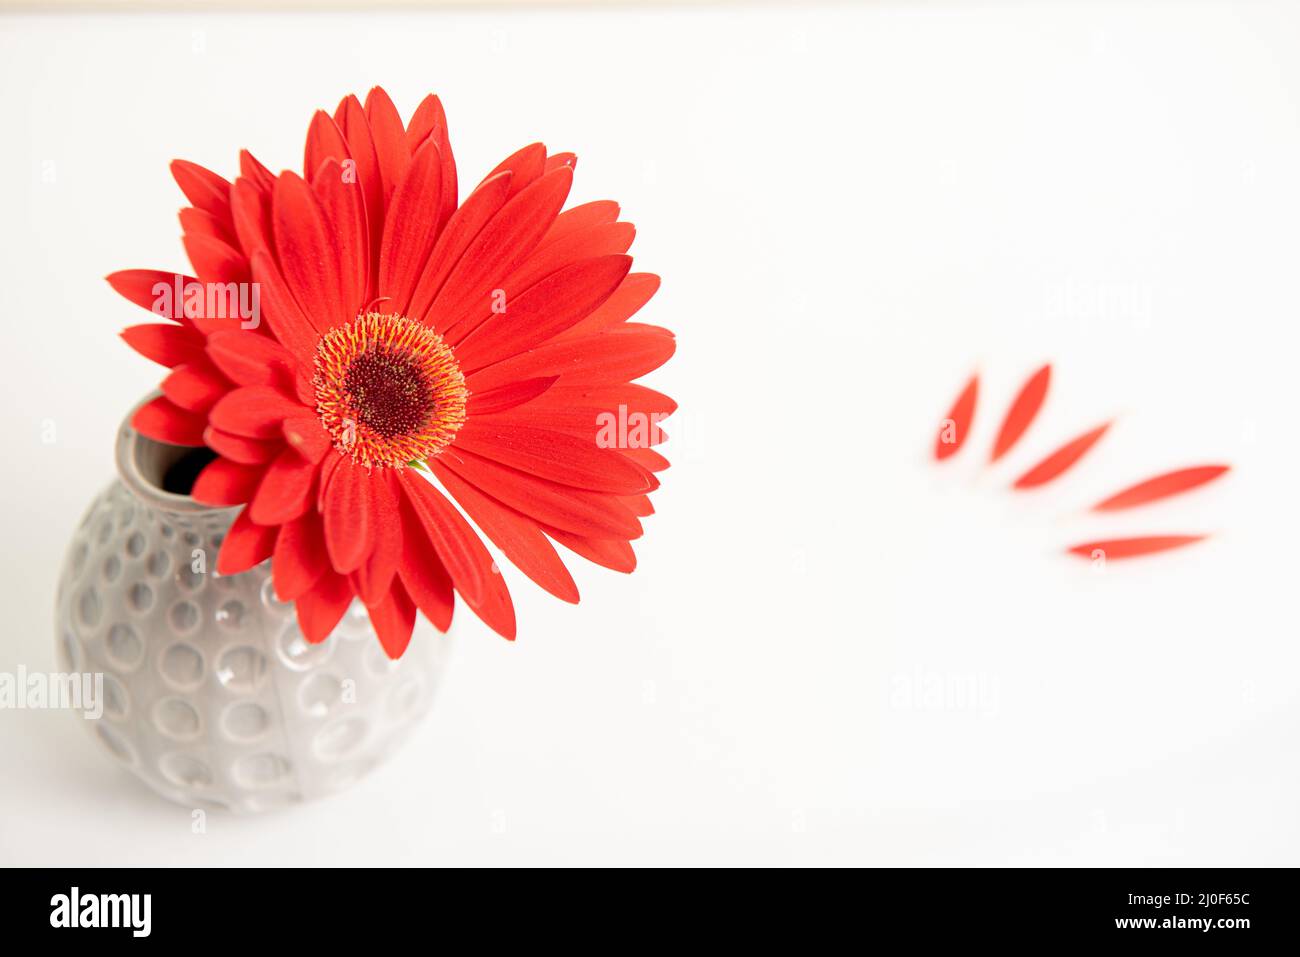 Red Gazania flower on a white stylish vase. Creative Still life photography Stock Photo